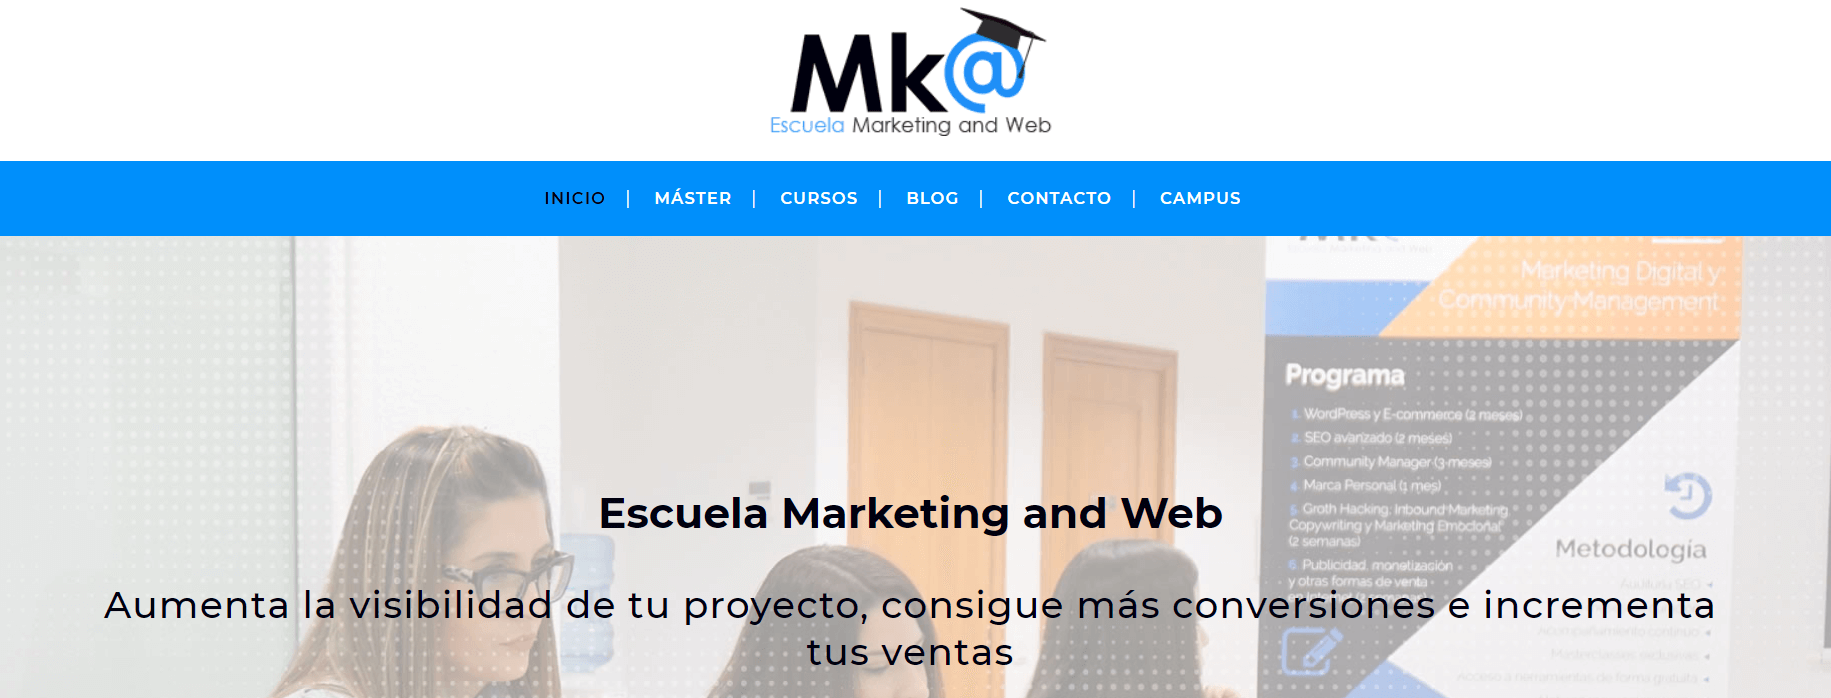 escuela marketing and web